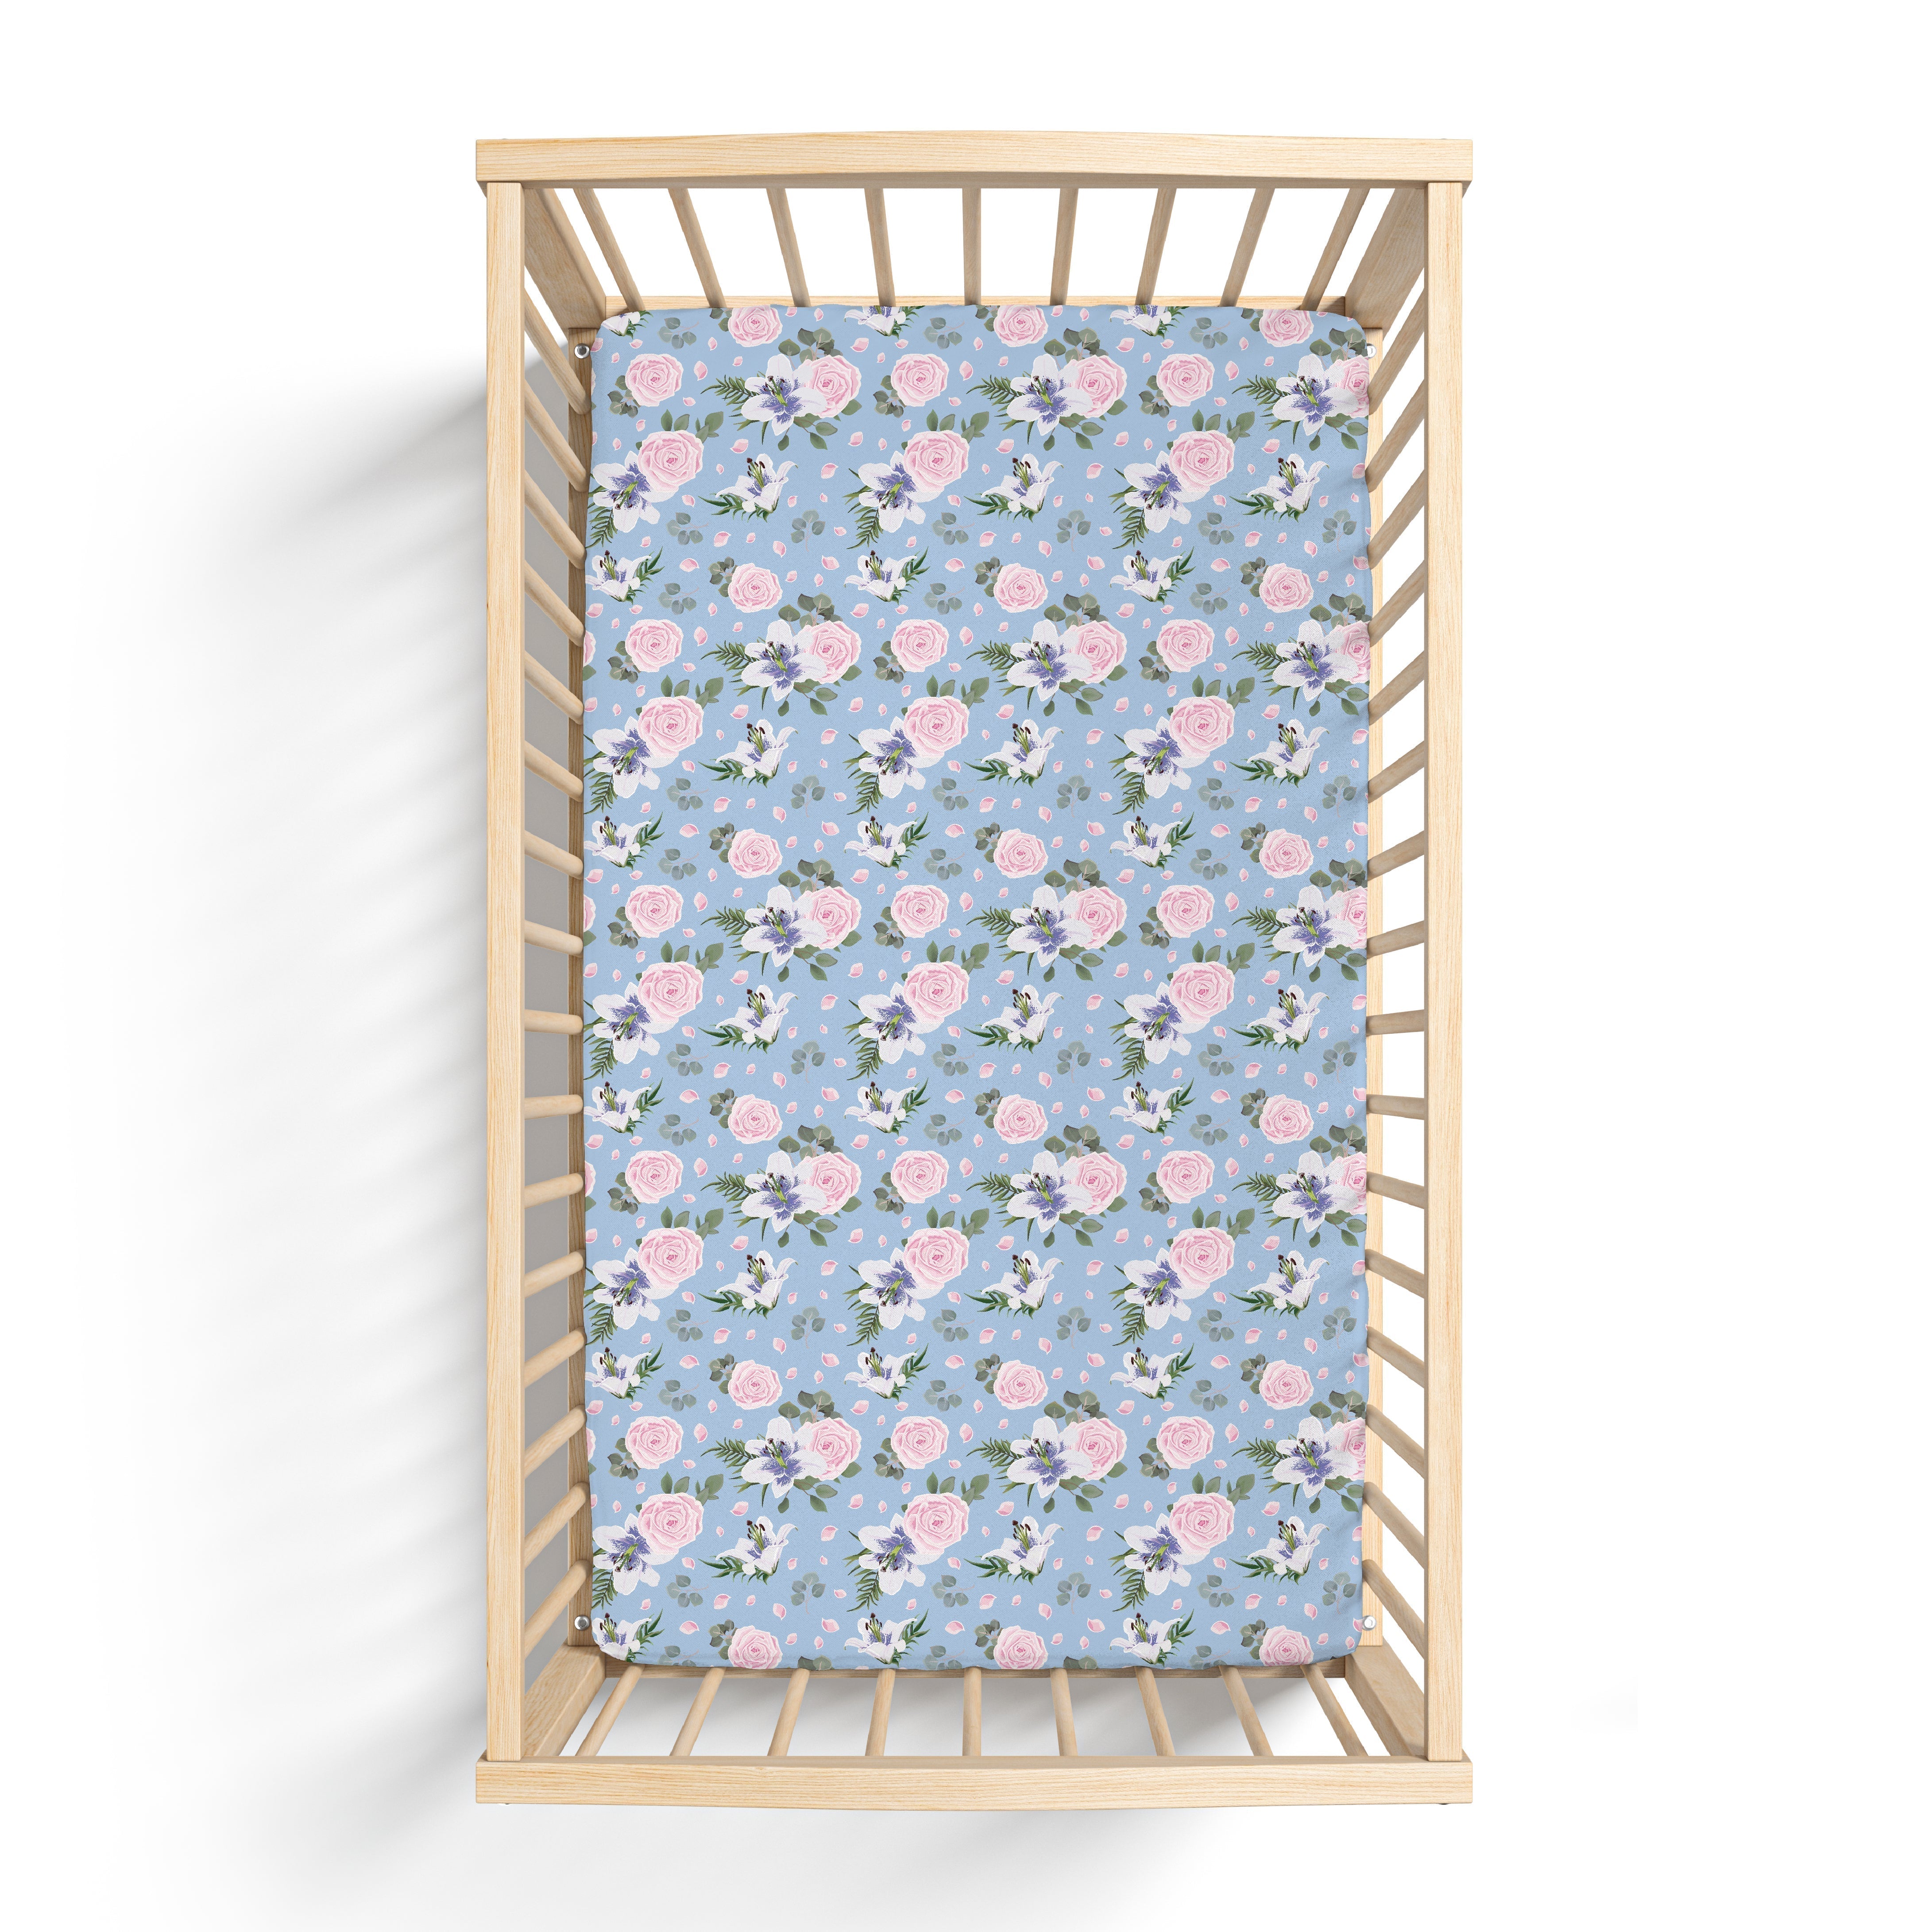 Lillian Floral Bamboo Crib Sheet